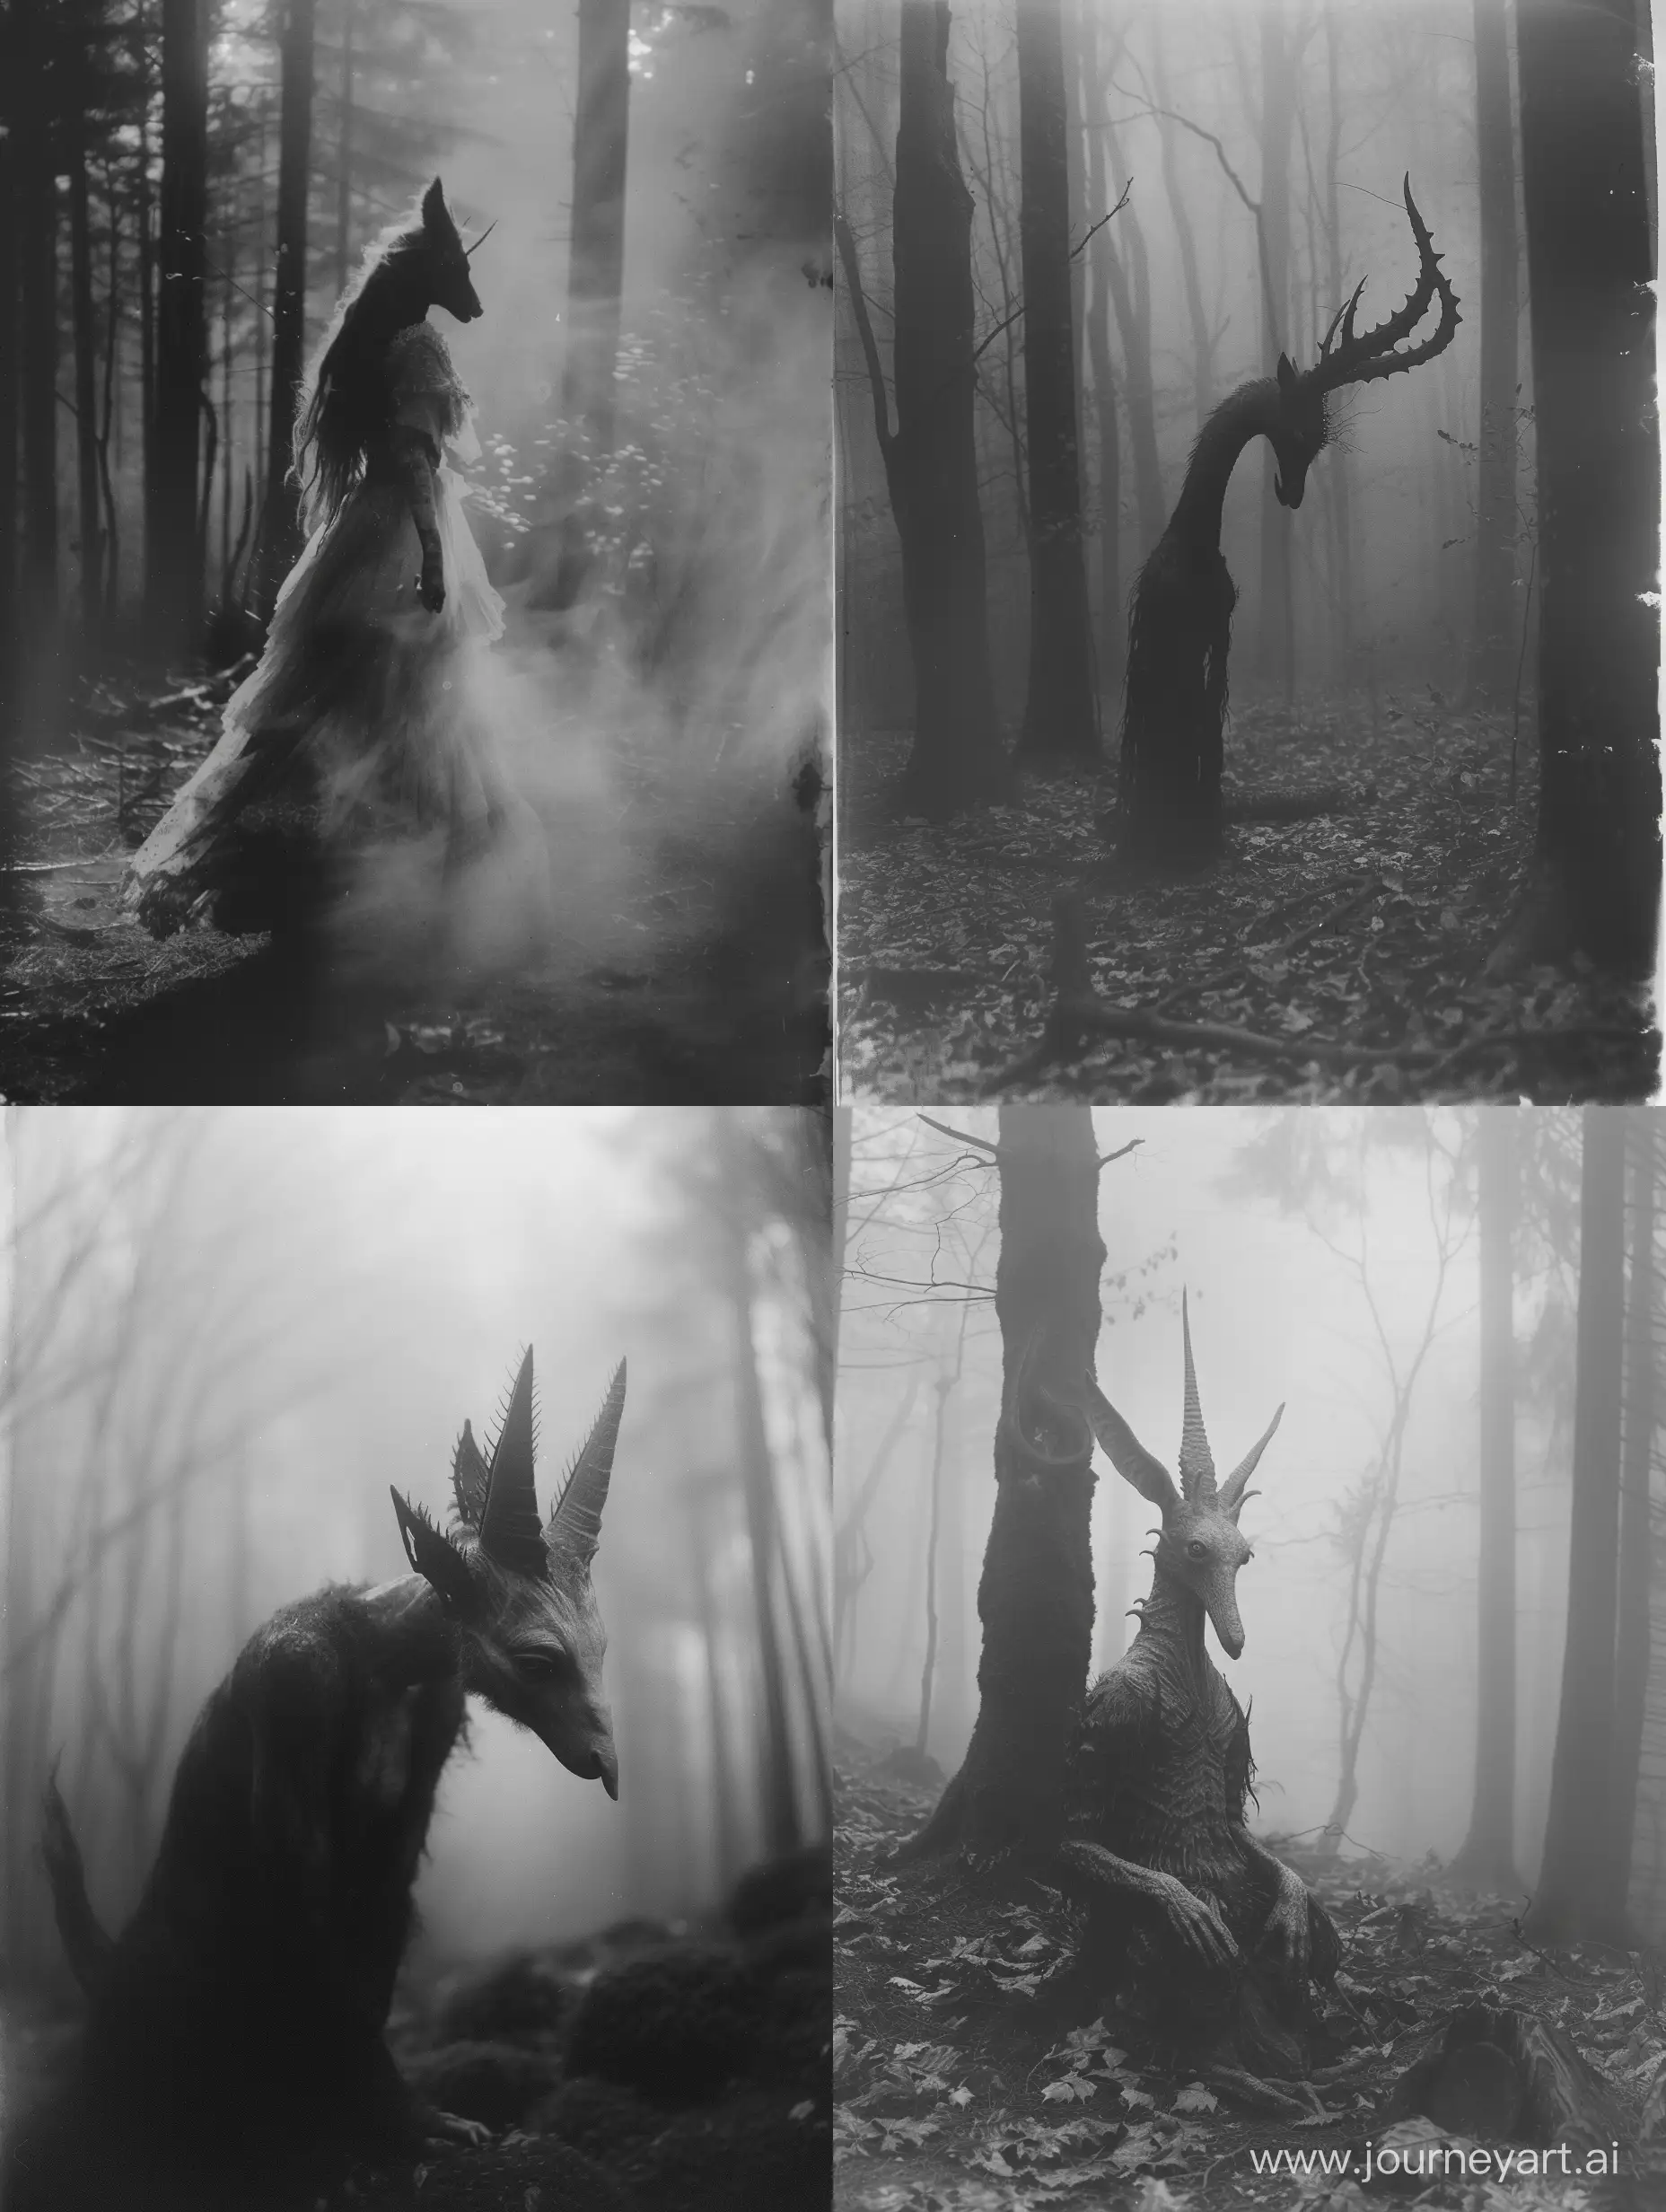 Foggy-Forest-Encounter-Hauntingly-Beautiful-HalfHuman-HalfBeast-Creature-in-Supernatural-Dread